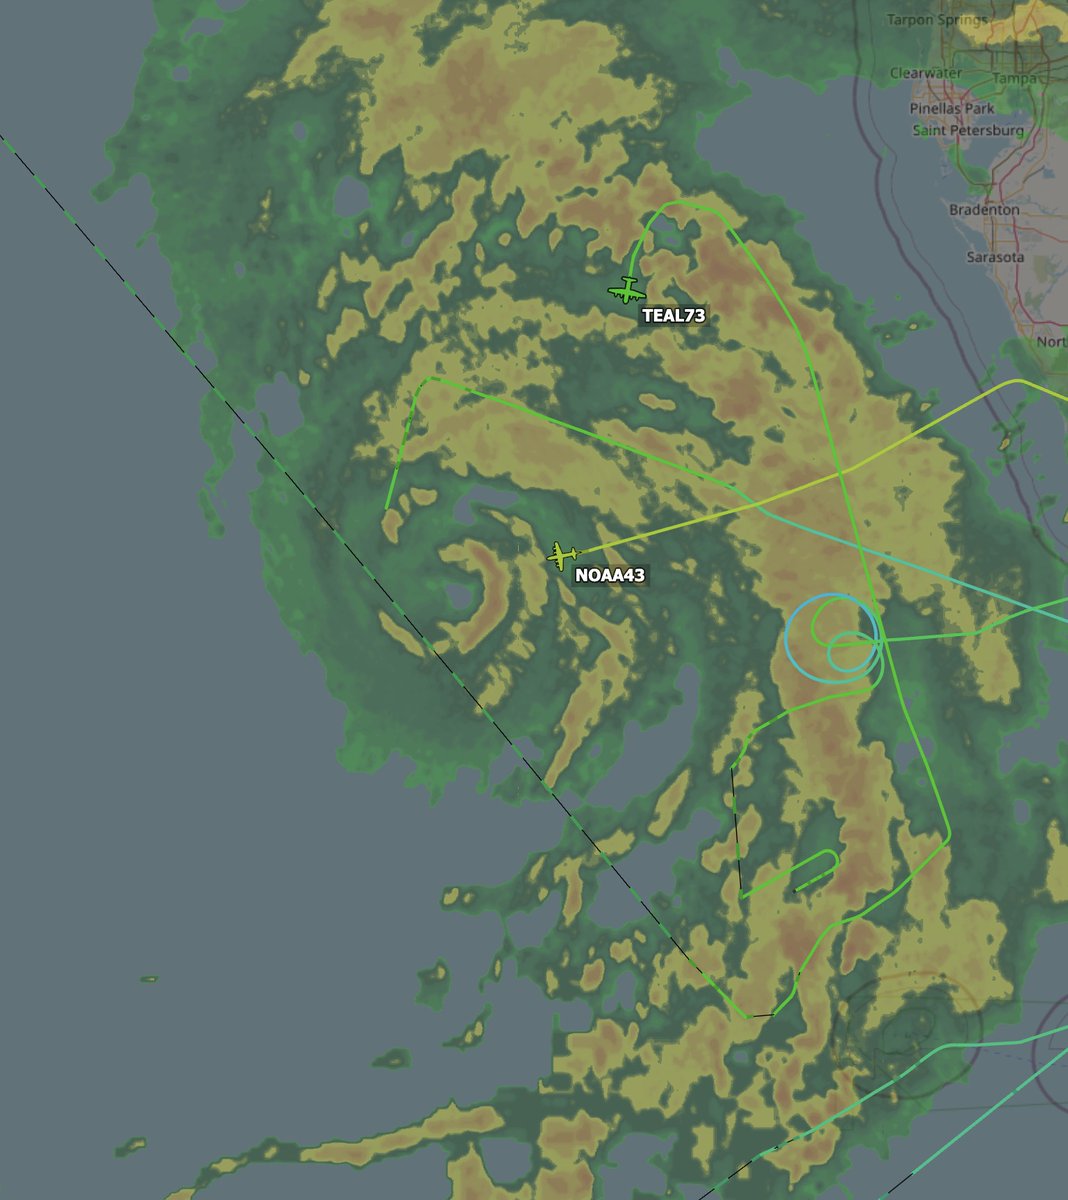 #NOAA43 heading straight for the eye #HurricaneIdalia